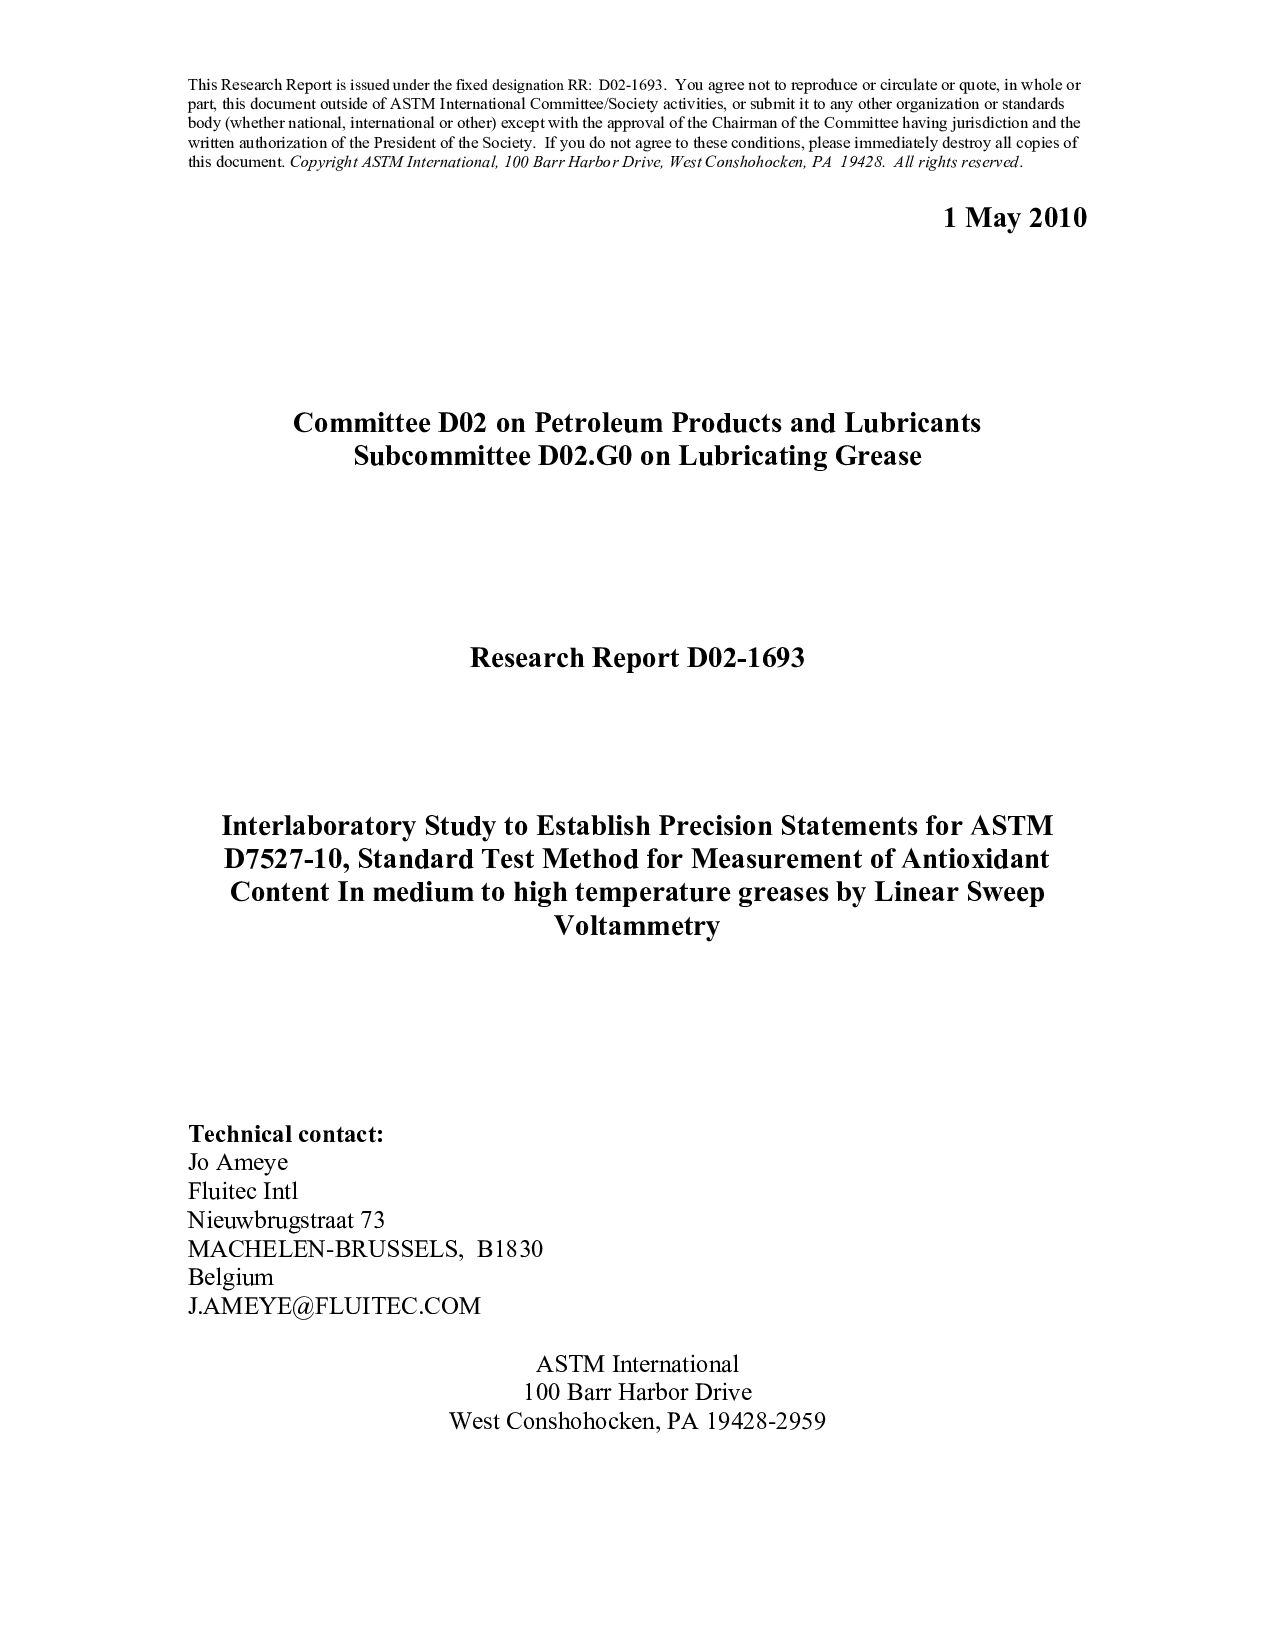 ASTM RR-D02-1693 2010封面图